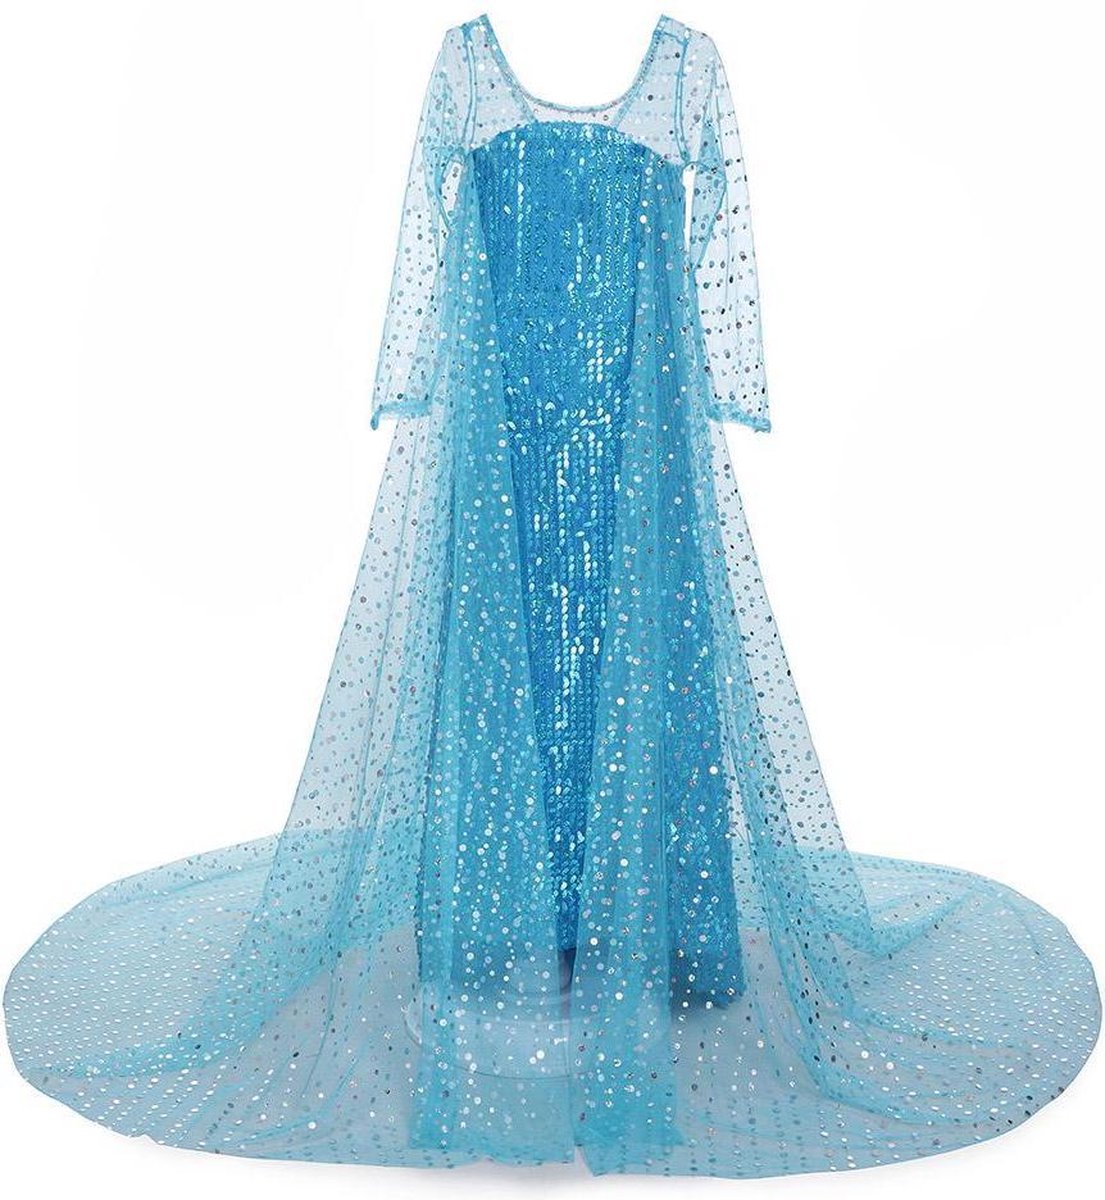 Prinses - Elsa jurk met sleep - Frozen - Prinsessenjurk - Verkleedkleding - Blauw - Maat 110/116 (4/5 jaar)